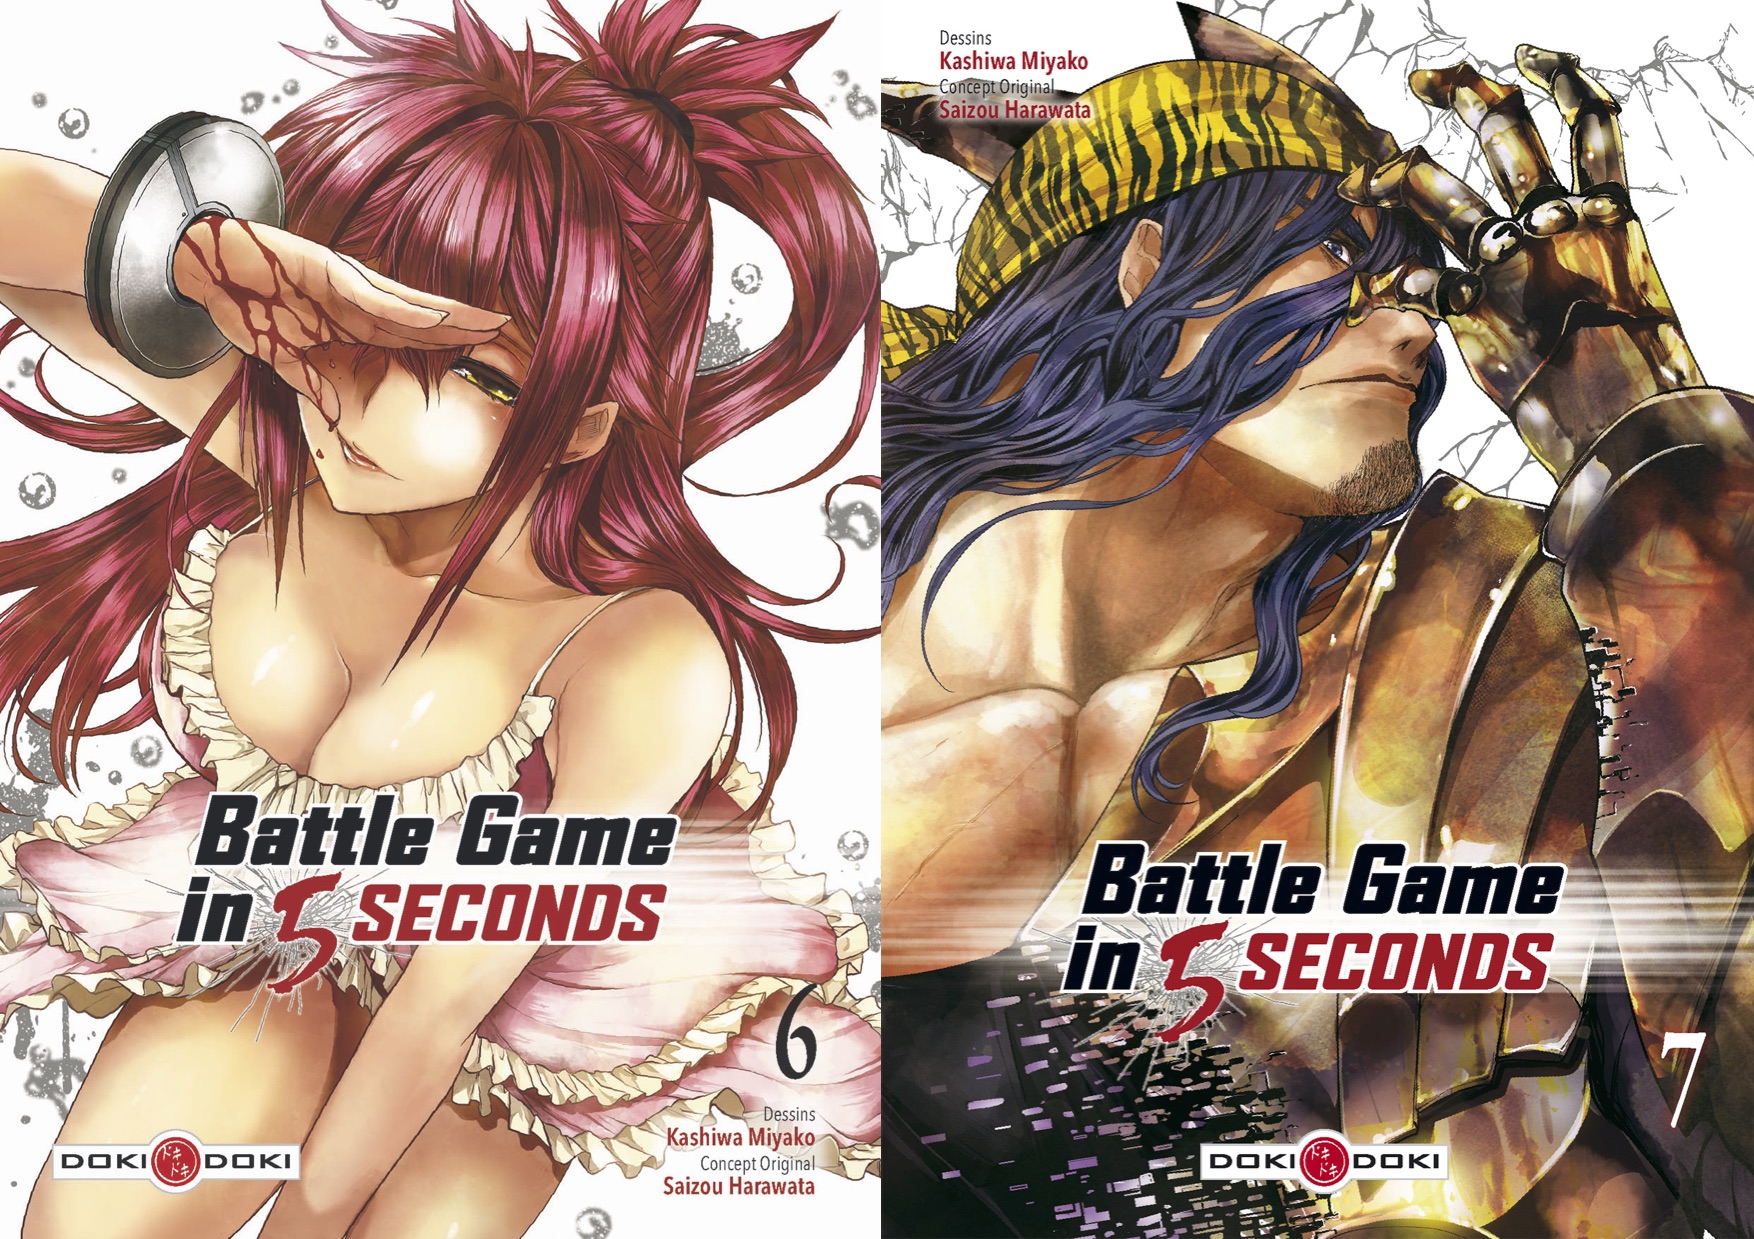 Battle Game in 5 Seconds - vol. 06